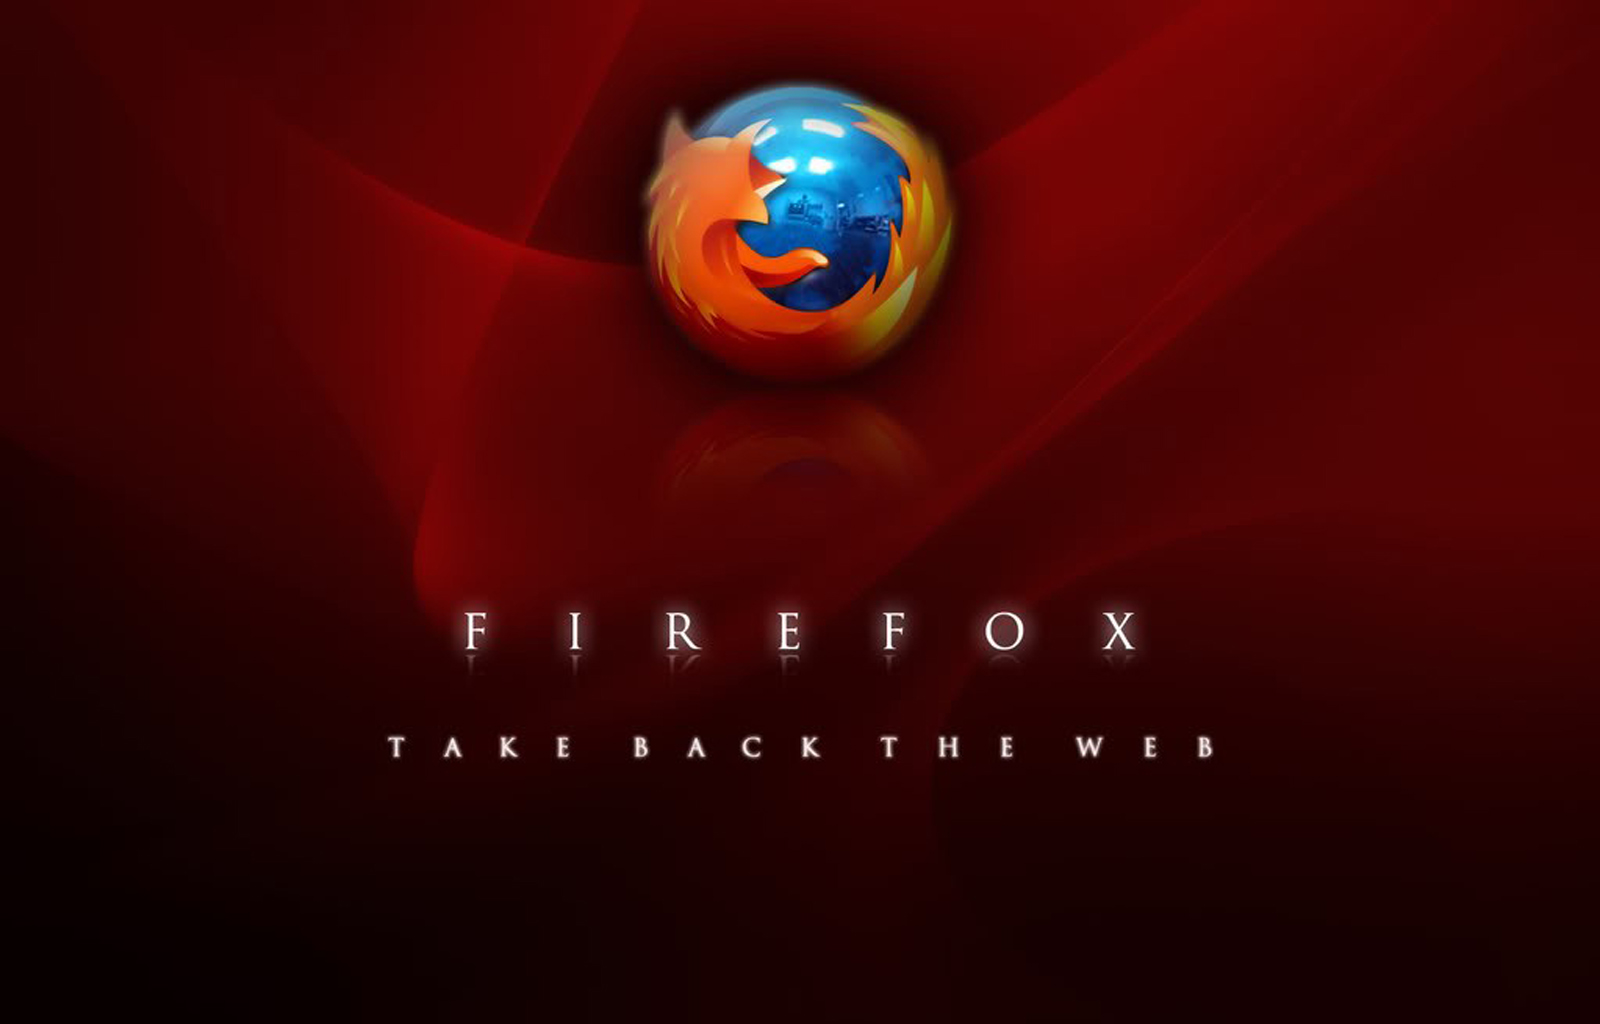 Firefox HD Wallpaper Mozilla Background Desktop